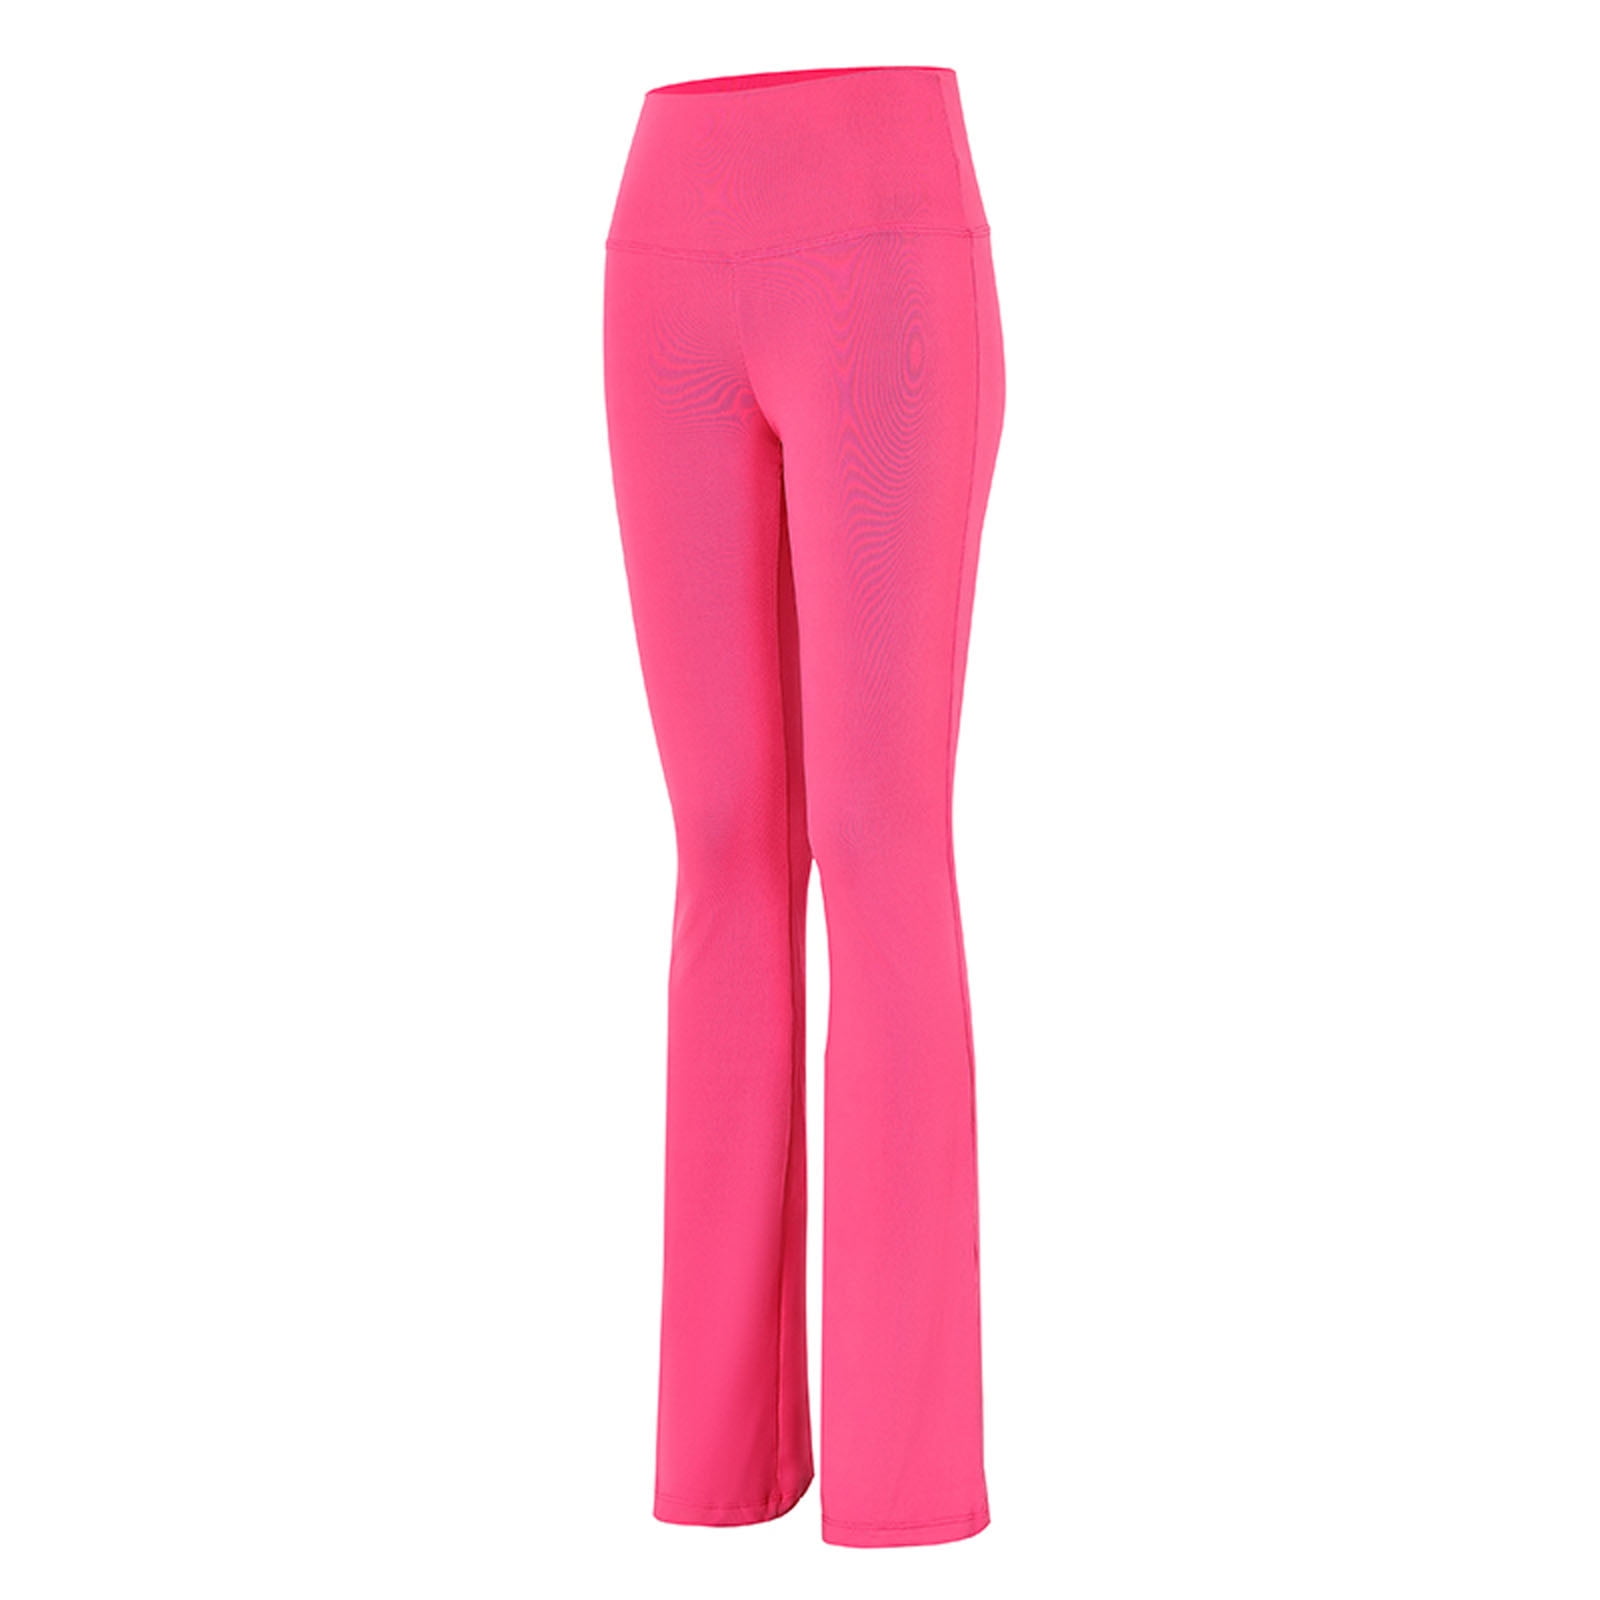 YWDJ Yoga Pants Flare Petite Length Women Trousers High Elastic High Waist Flared  Pants Thin Yoga Pants Physical Fitness Pants Hot Pink XS 